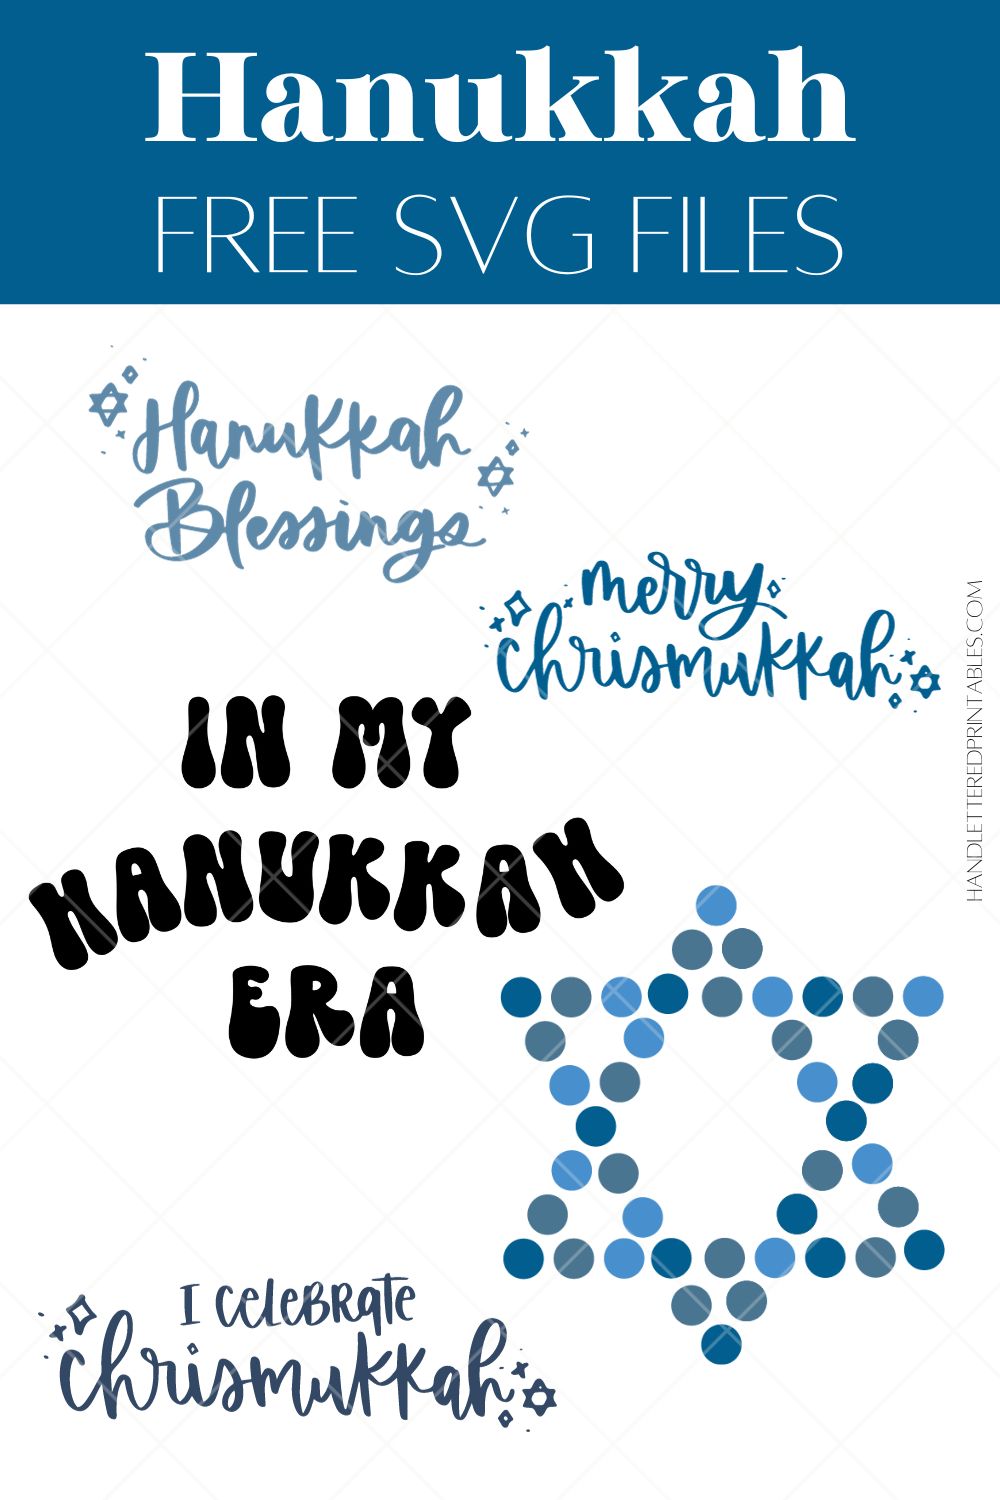 Free Hanukkah themed SVG files!